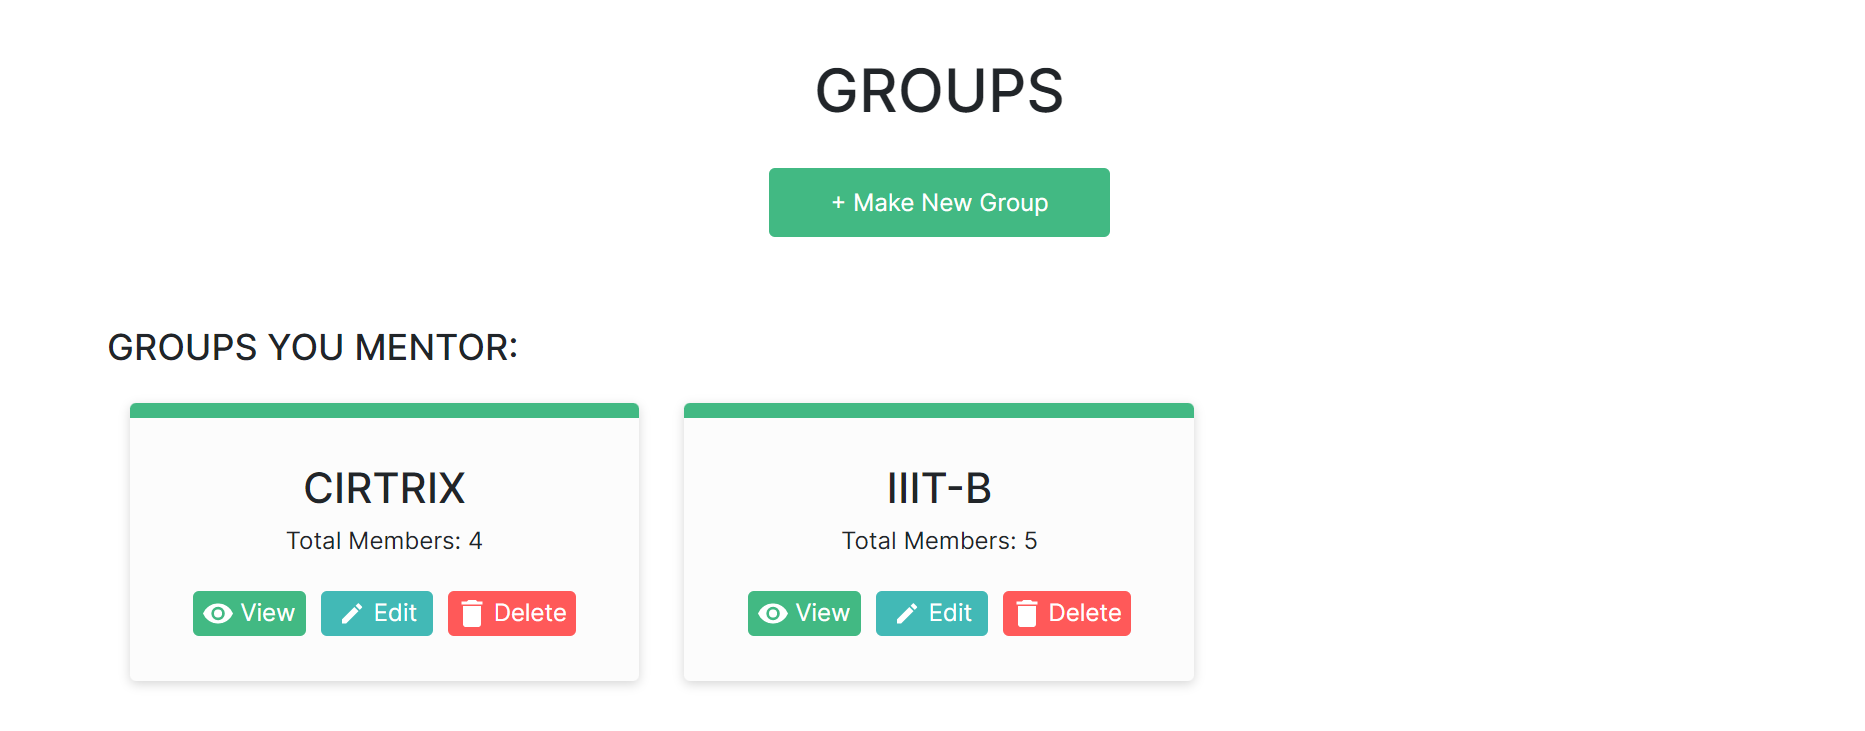 Groups screenshot